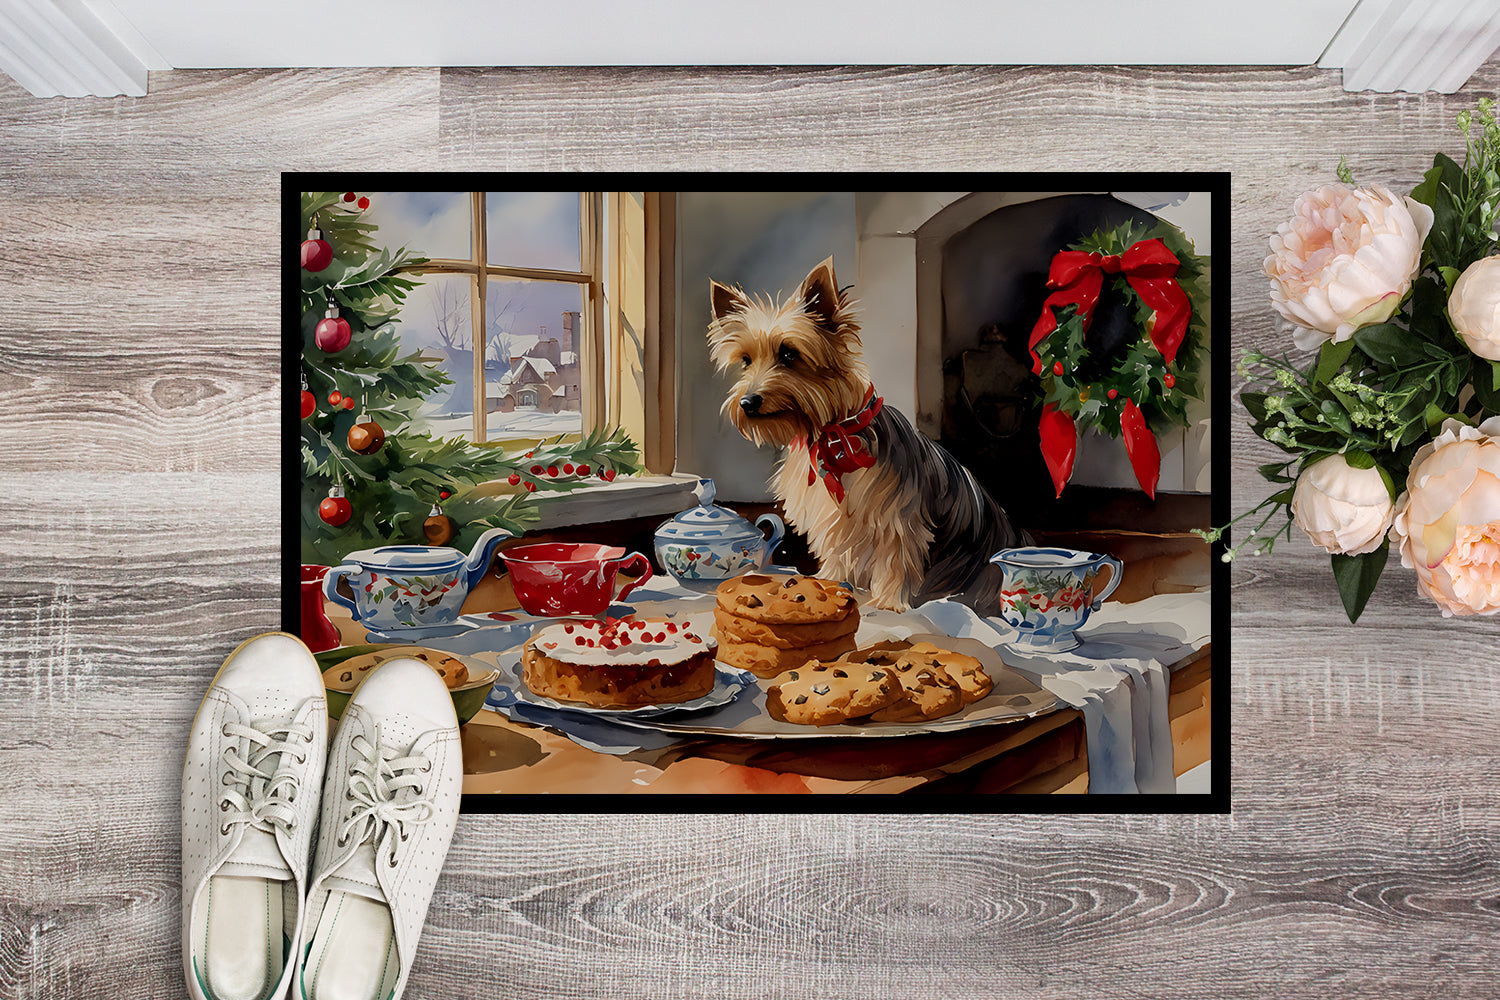 Buy this Silky Terrier Christmas Cookies Doormat